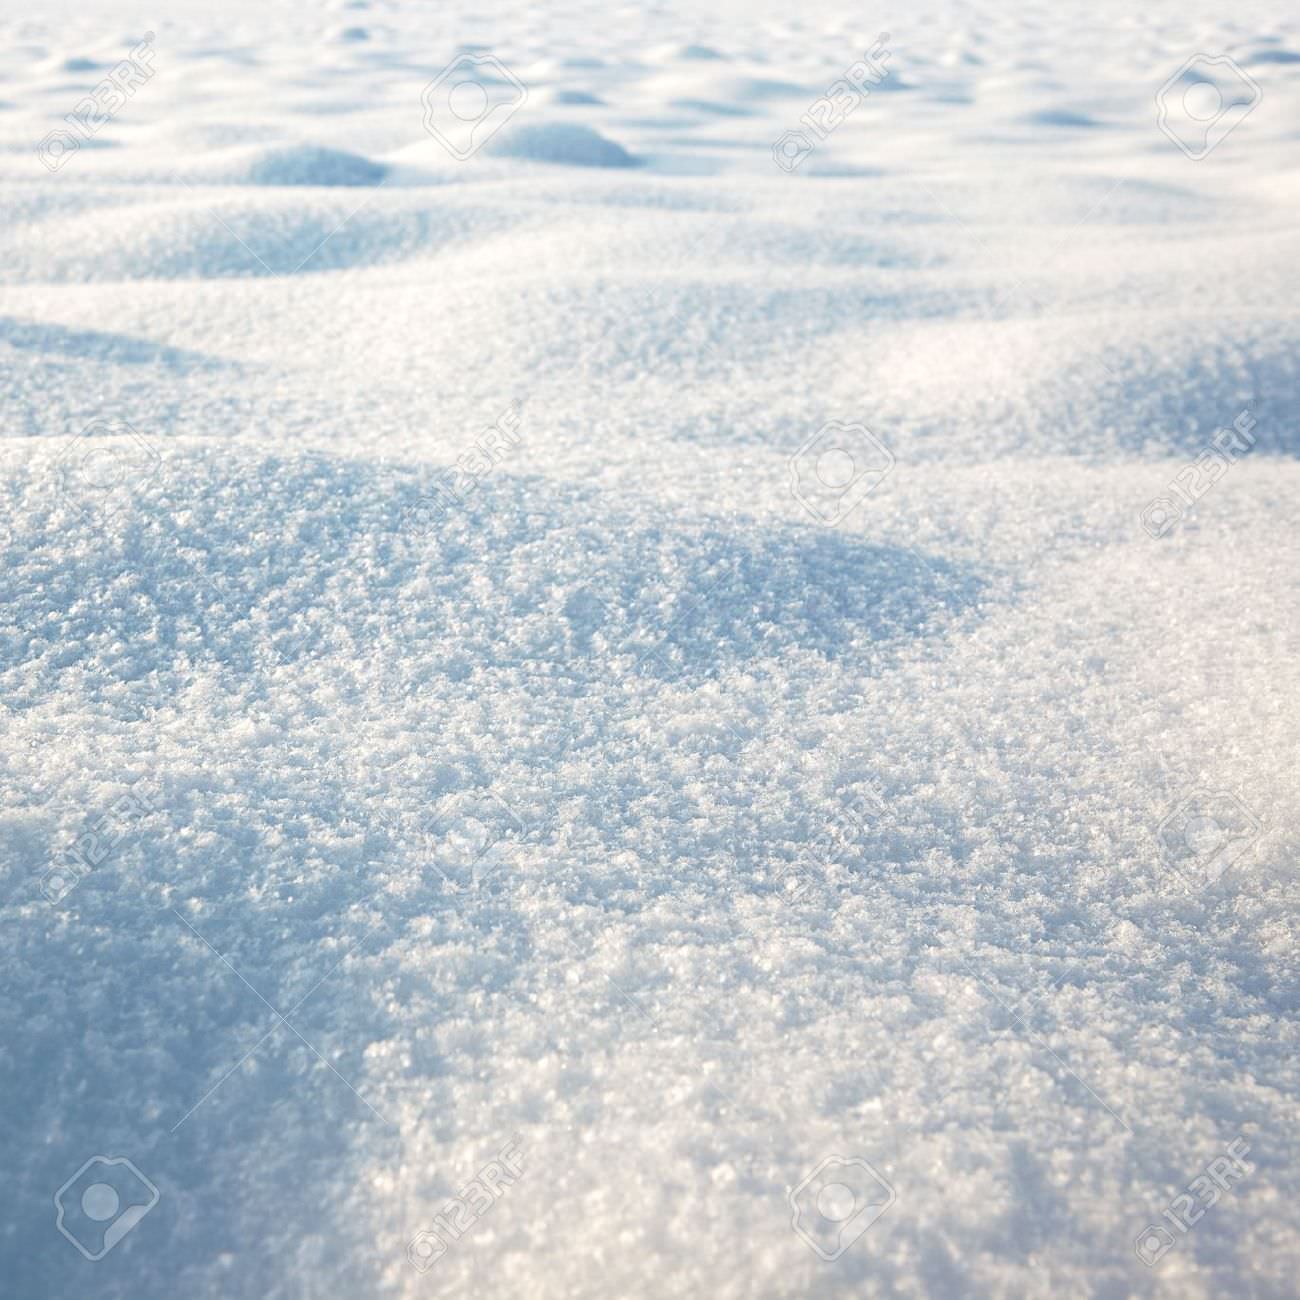 winter scene snow texture